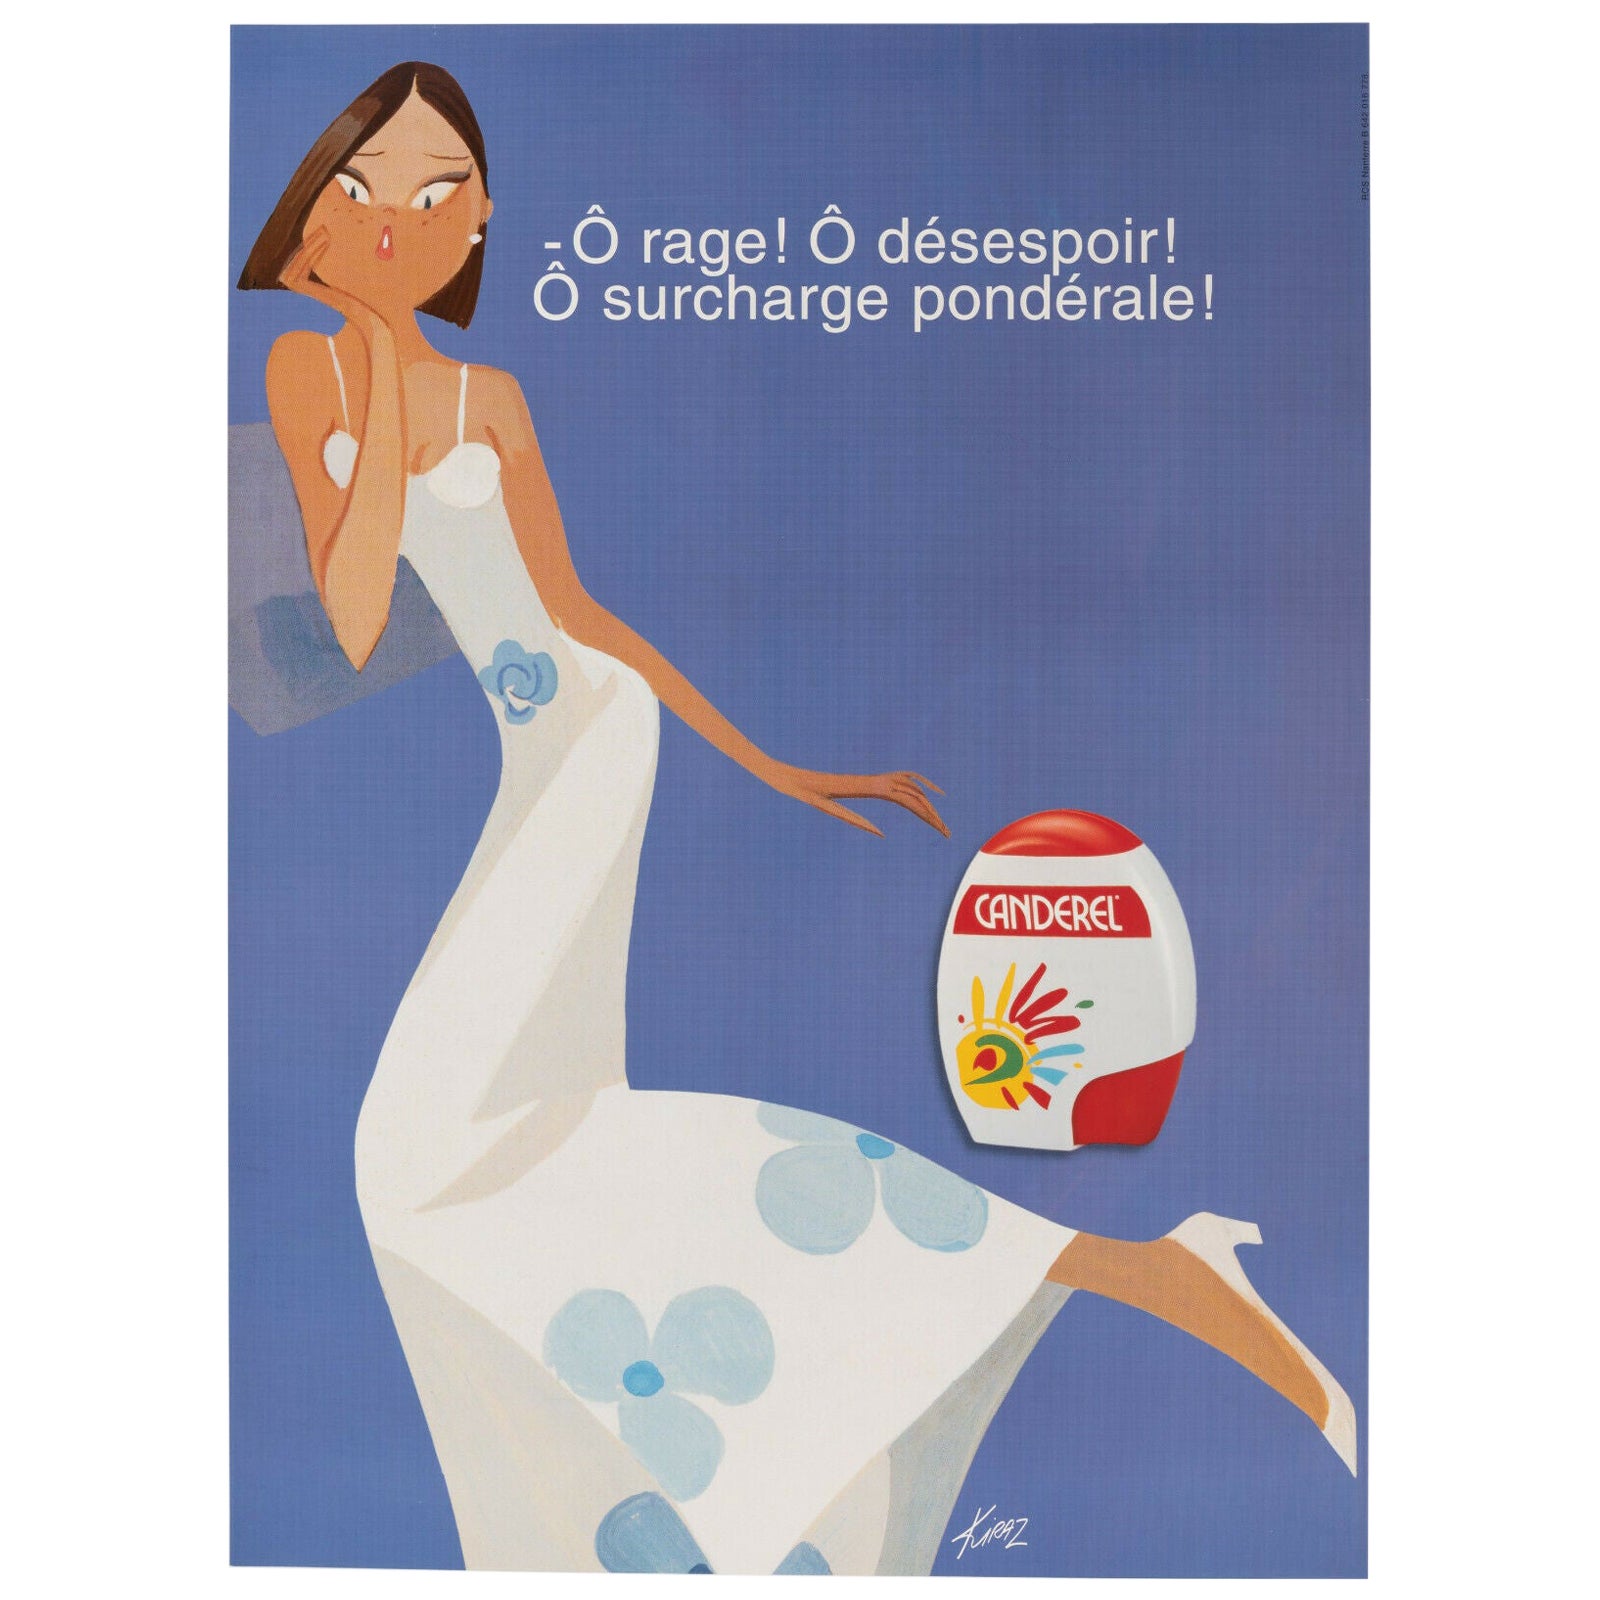 Original Poster-Kiraz-Canderel-Rage-Desespoir-Parisiennes, c.1990